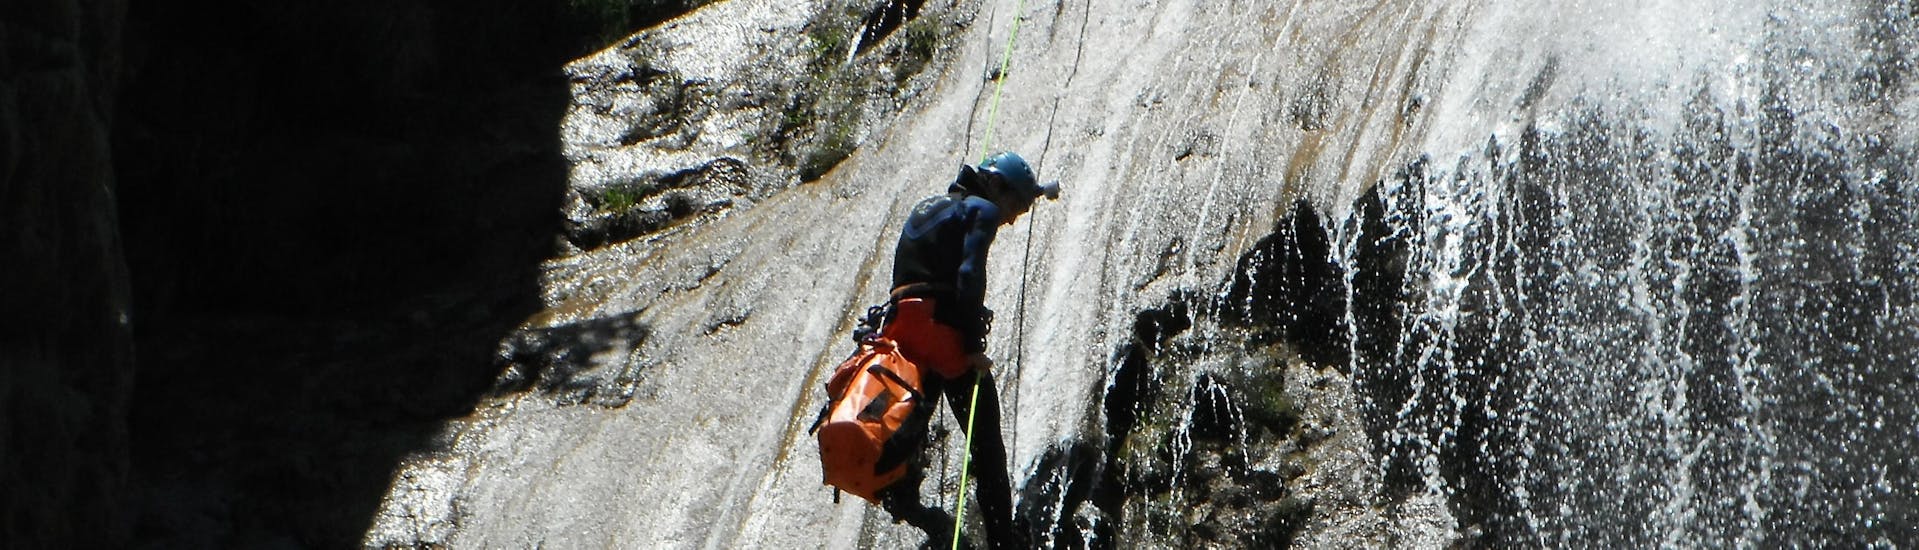 Expert Canyoning in Champdepraz - Nissod.